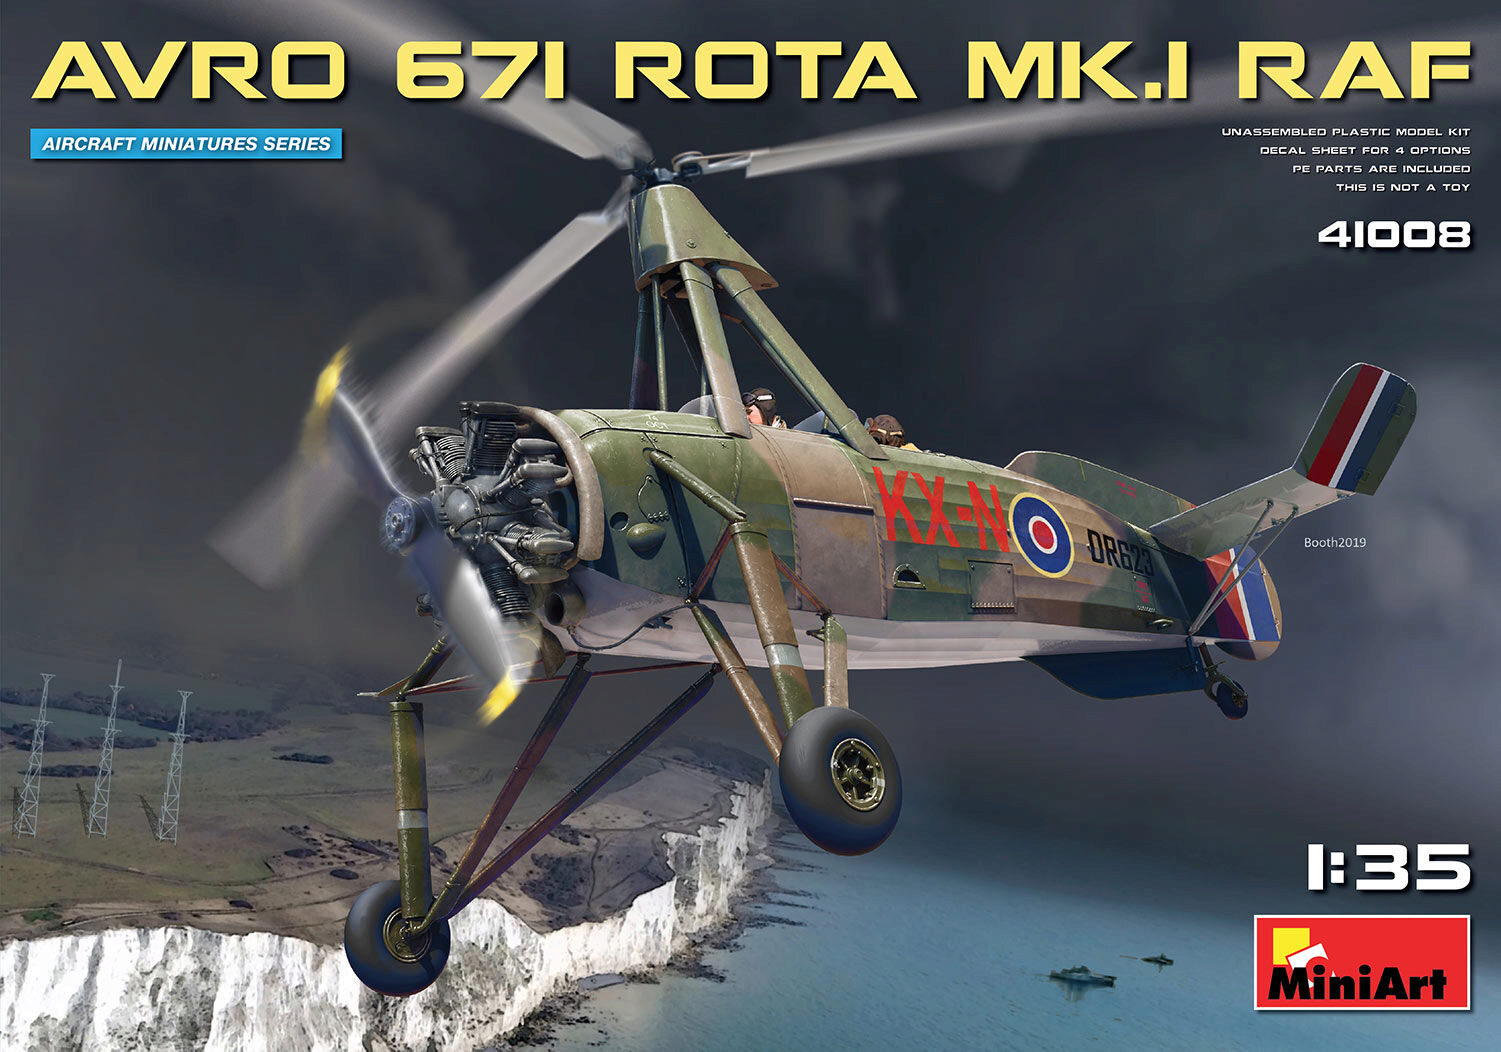 MiniArt 41008 Avro 671 Rota Mk.I RAF